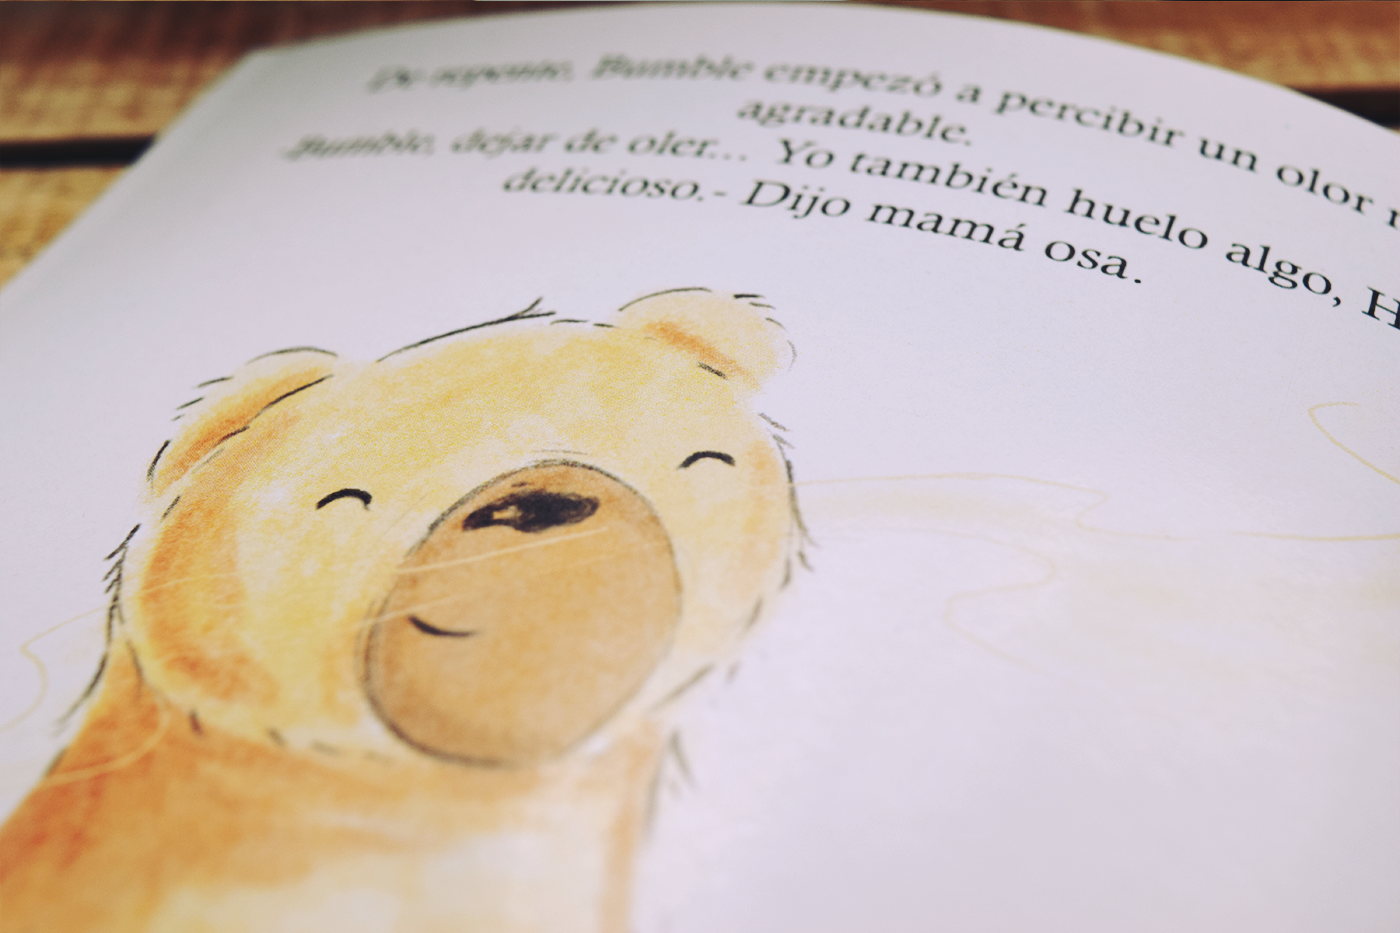 bear honey children infantil cuento story